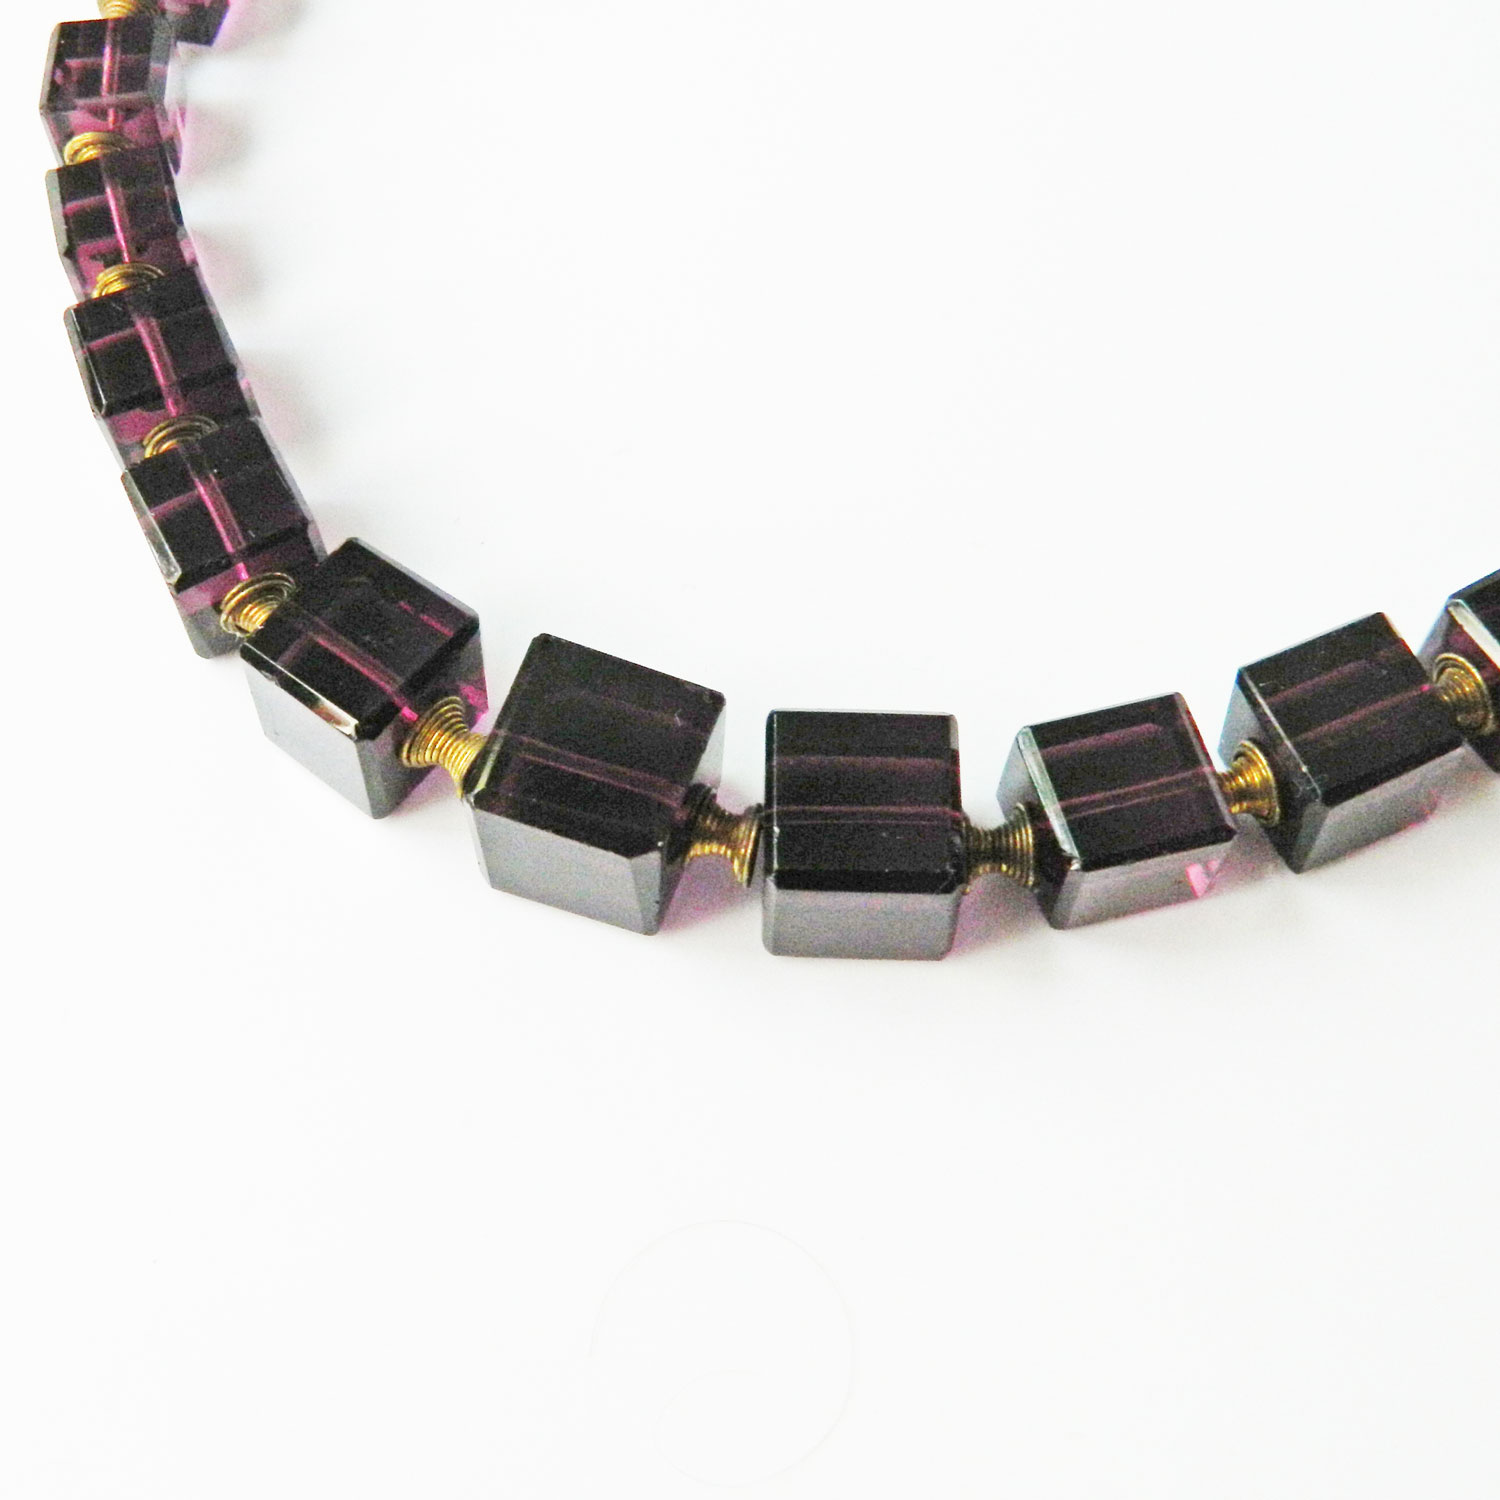 Purple Cube Bead Necklace